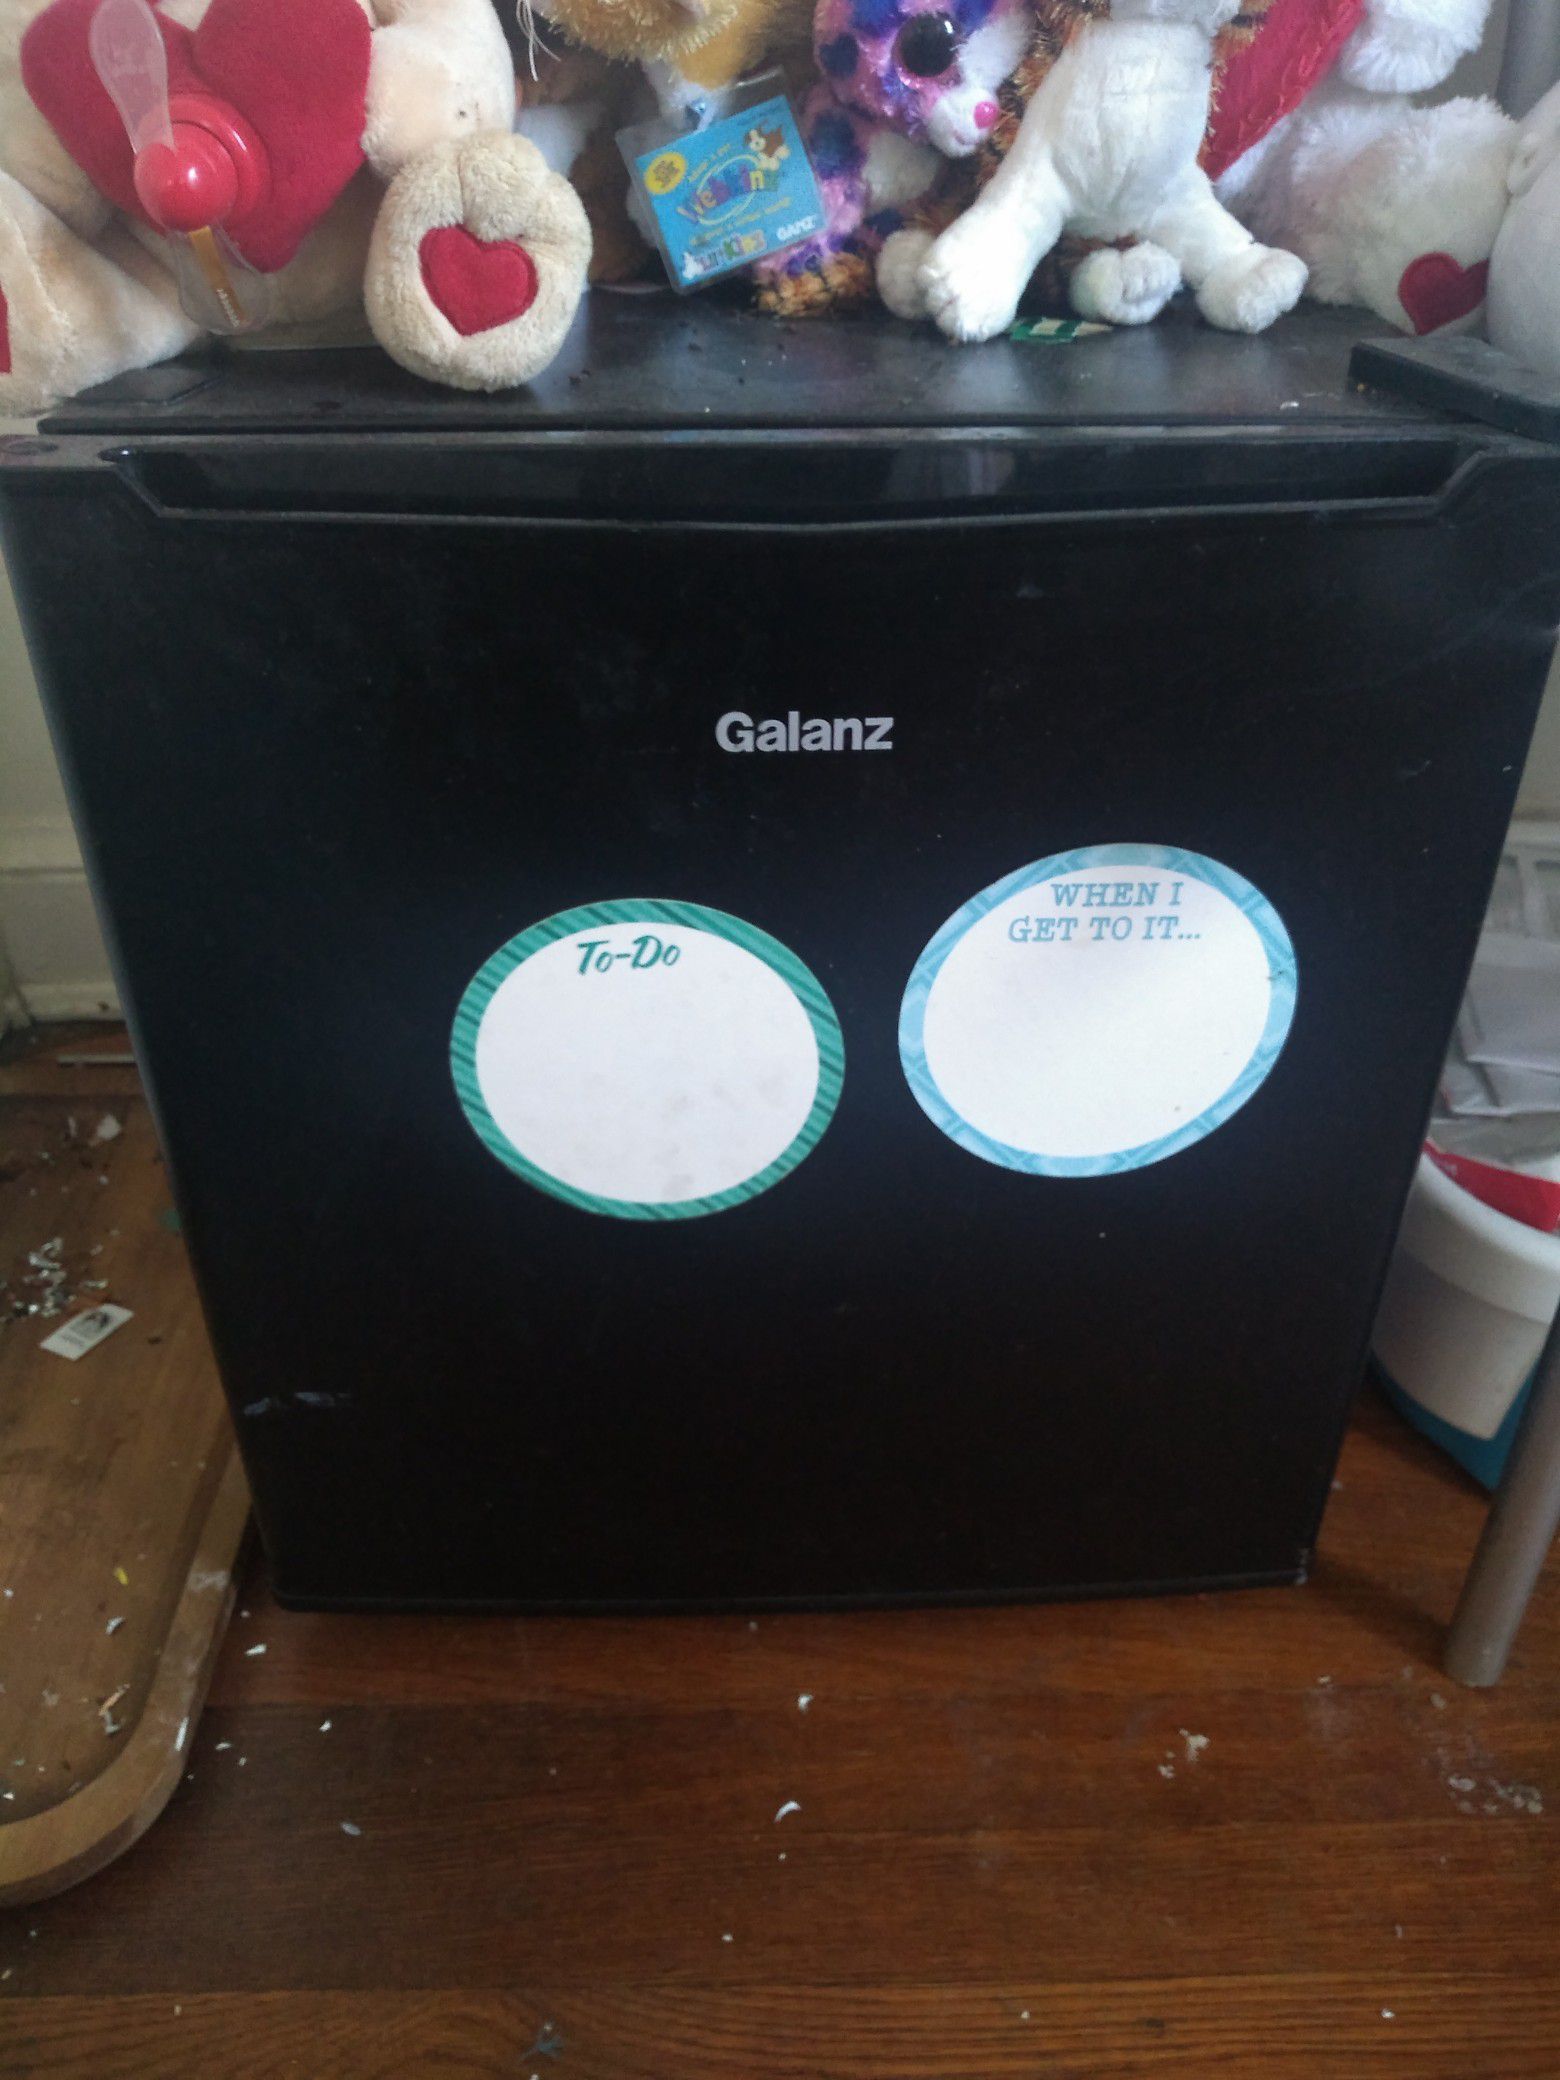 Galanz mini fridge /refrigerator for bedroom/college